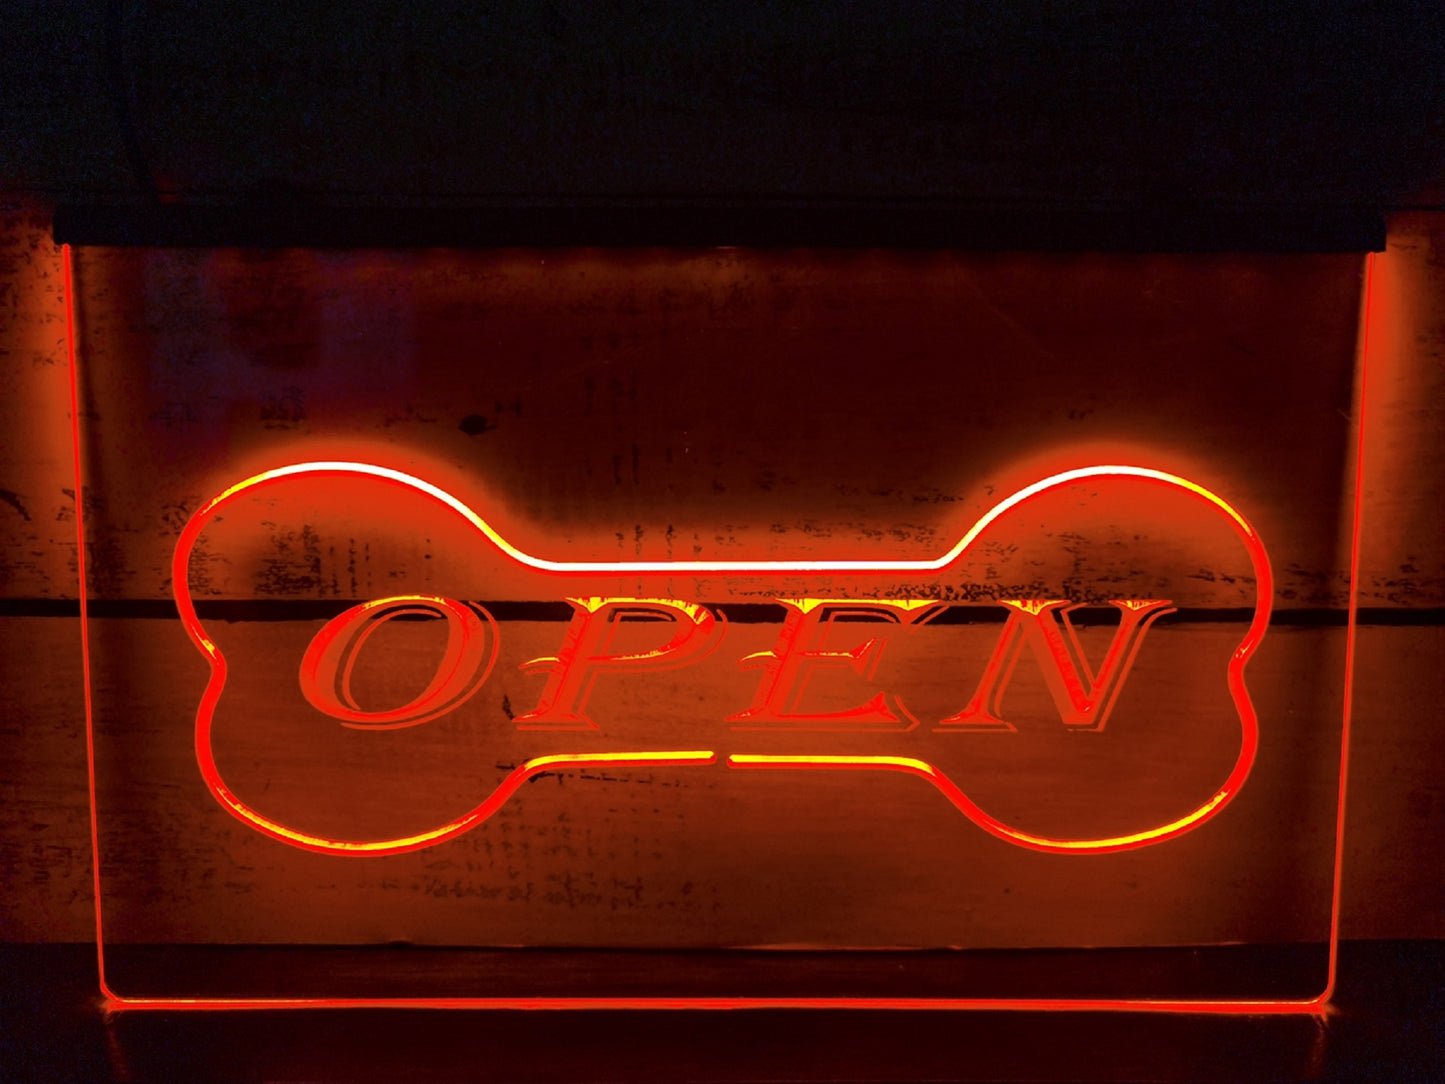 Neon Sign Open Dog Shop Wall Desktop Decor Free Shipping